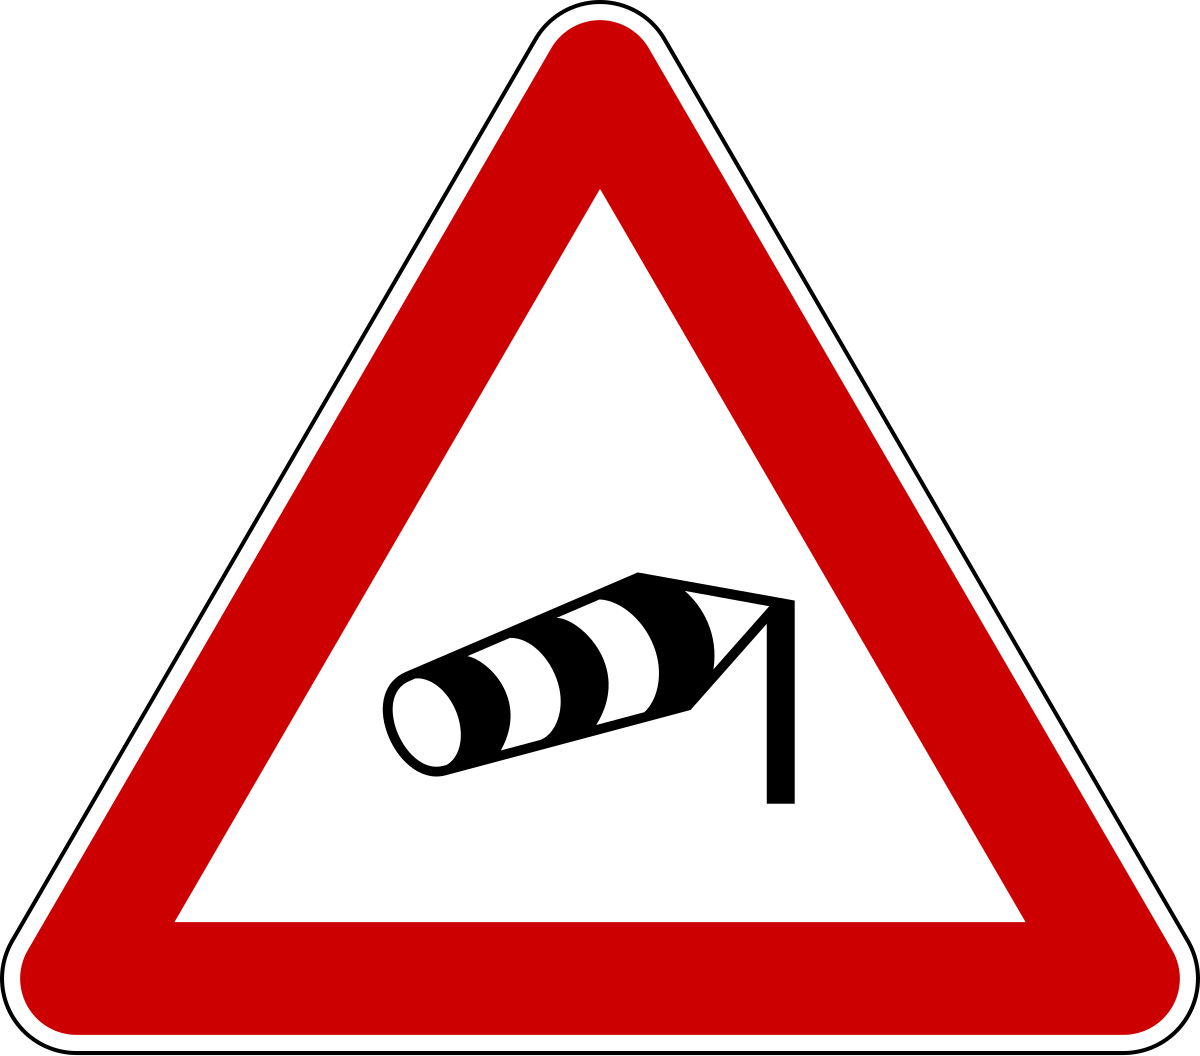 File:MK road sign 113.1.svg - Wikipedia 